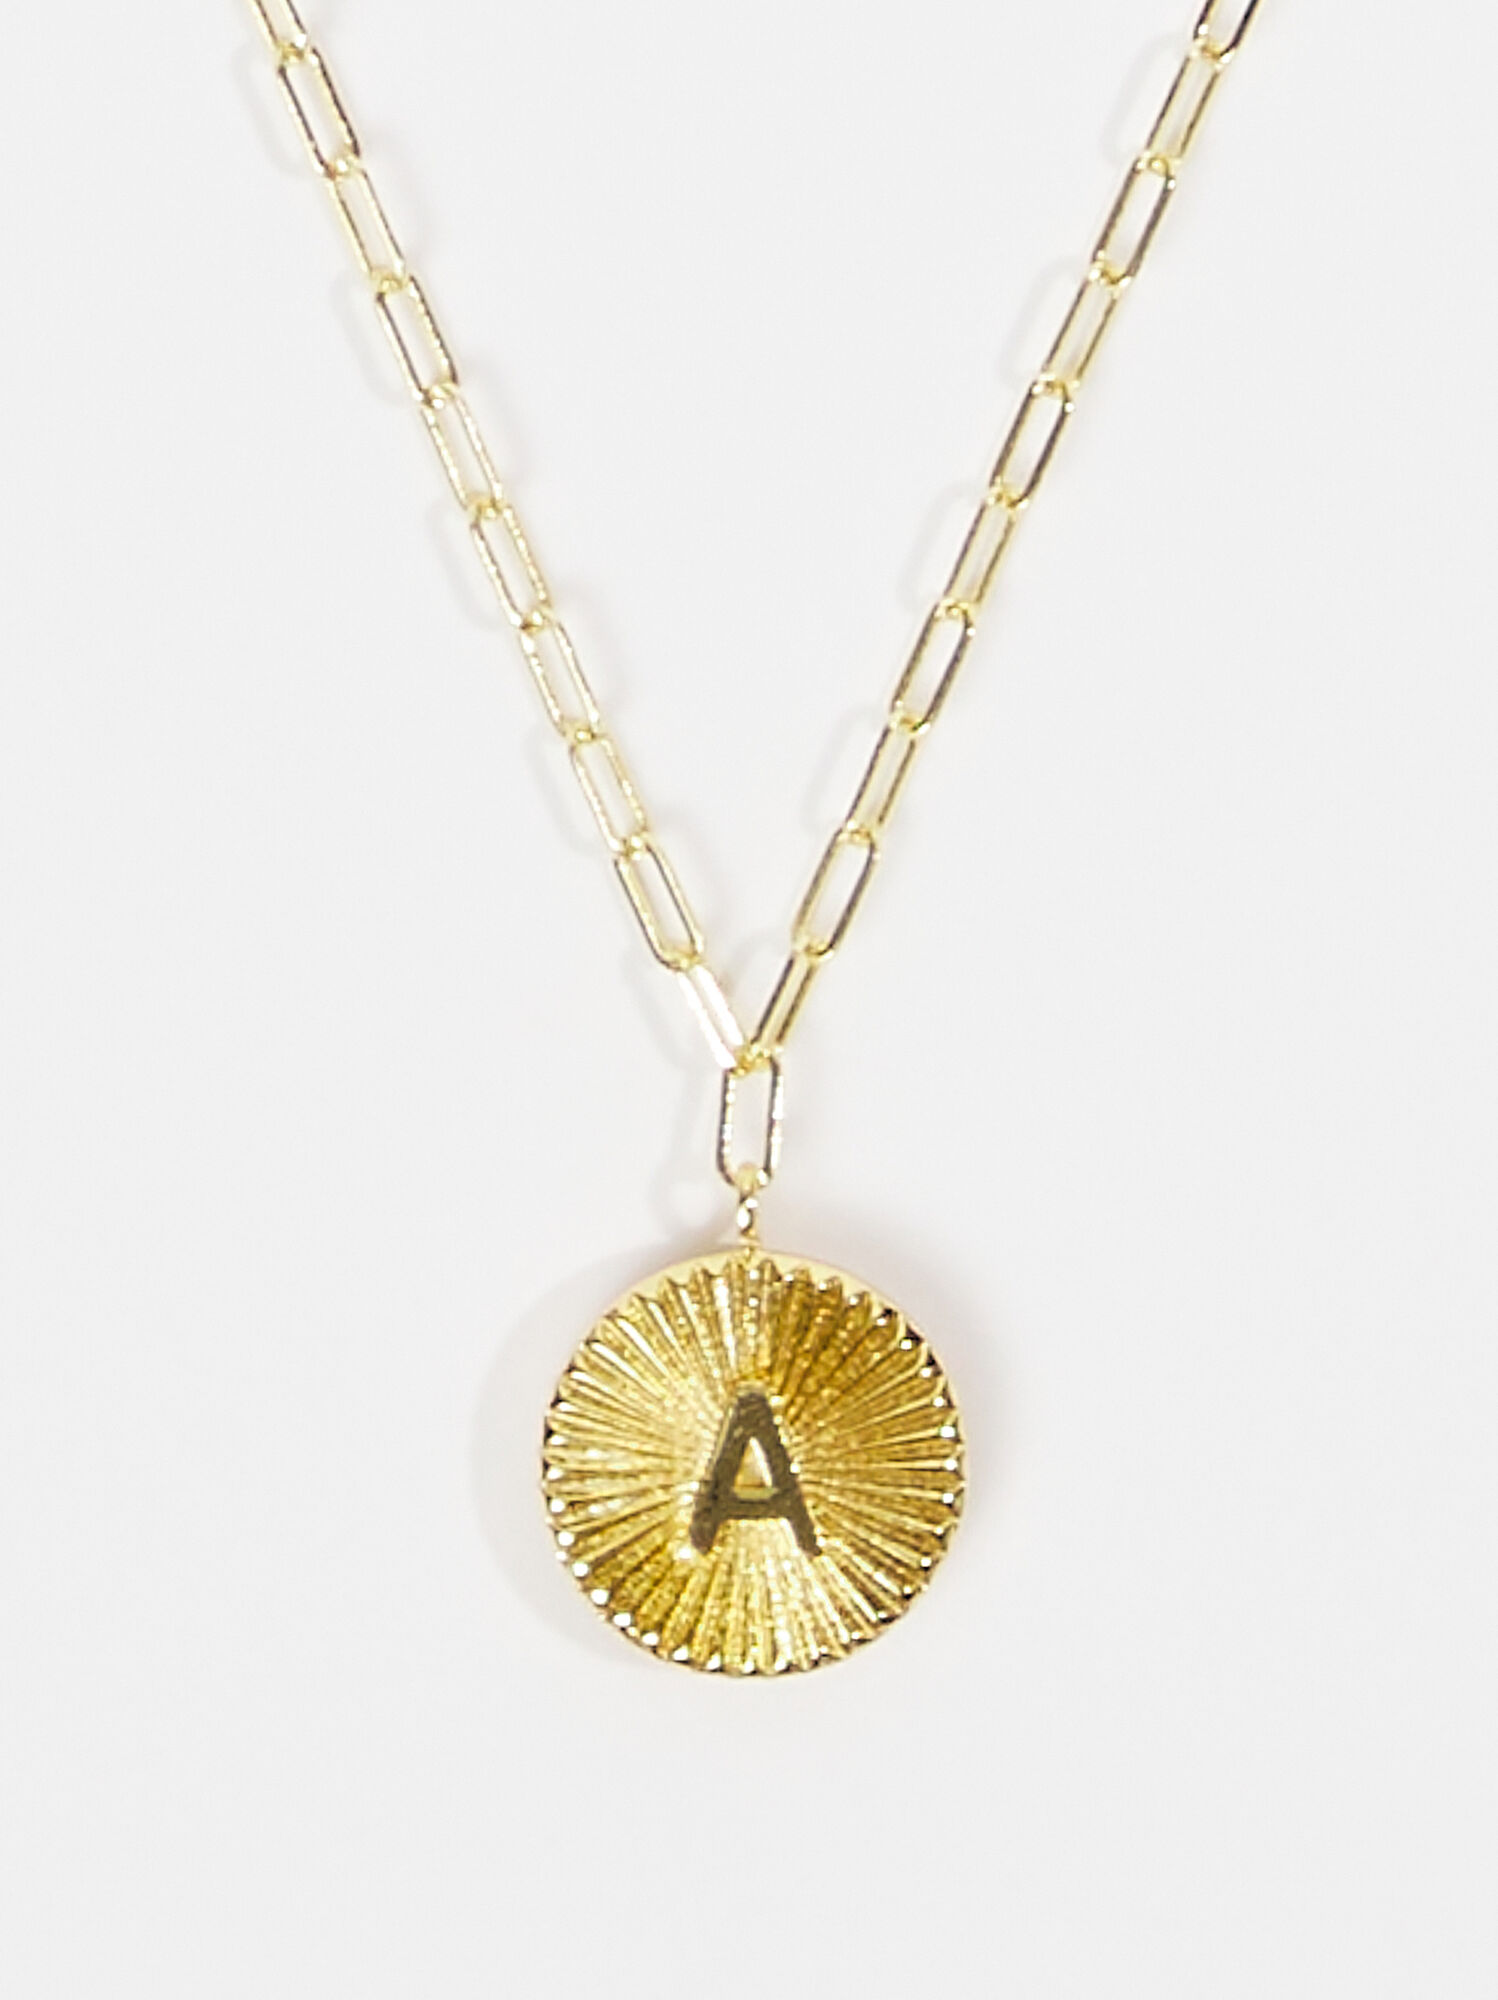 18k Gold Monogram Necklace